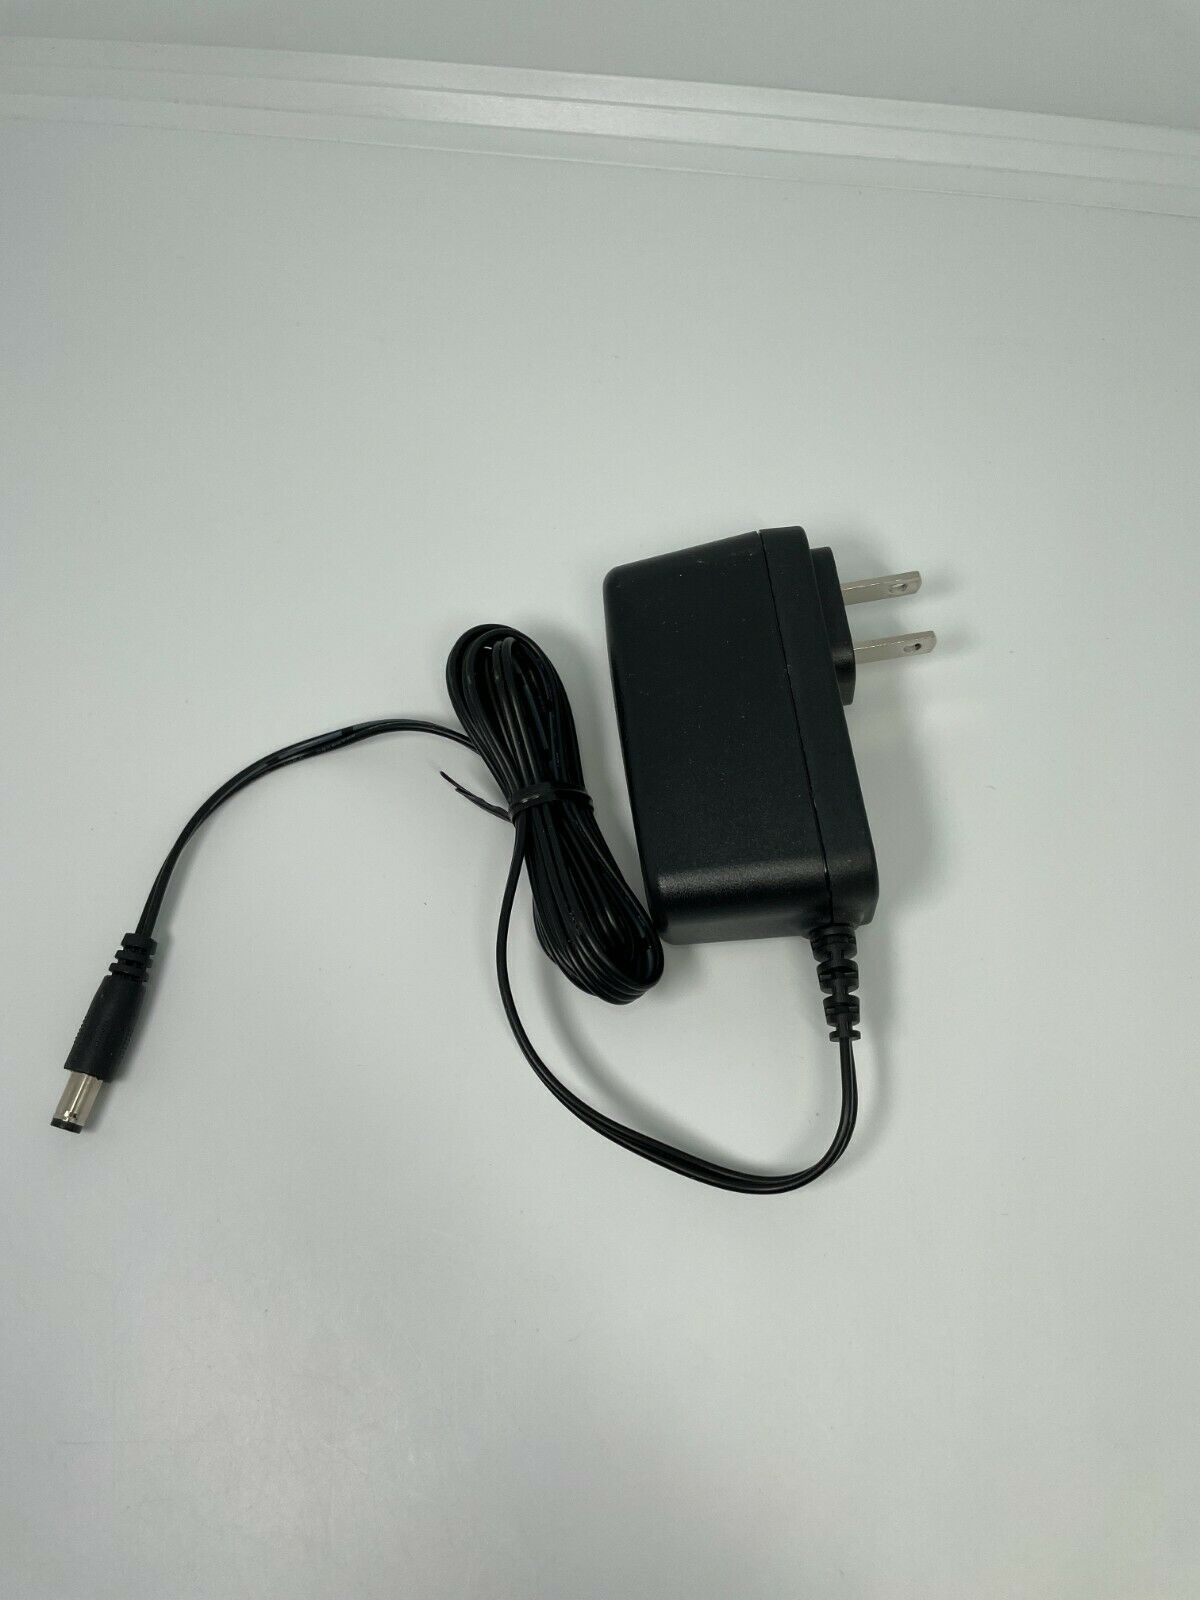 Netbit AC Adaptor Power Supply Model NBS12E120100VU Output 12V 1.0A Connection Split/Duplication: 1:2 Type: Adapter